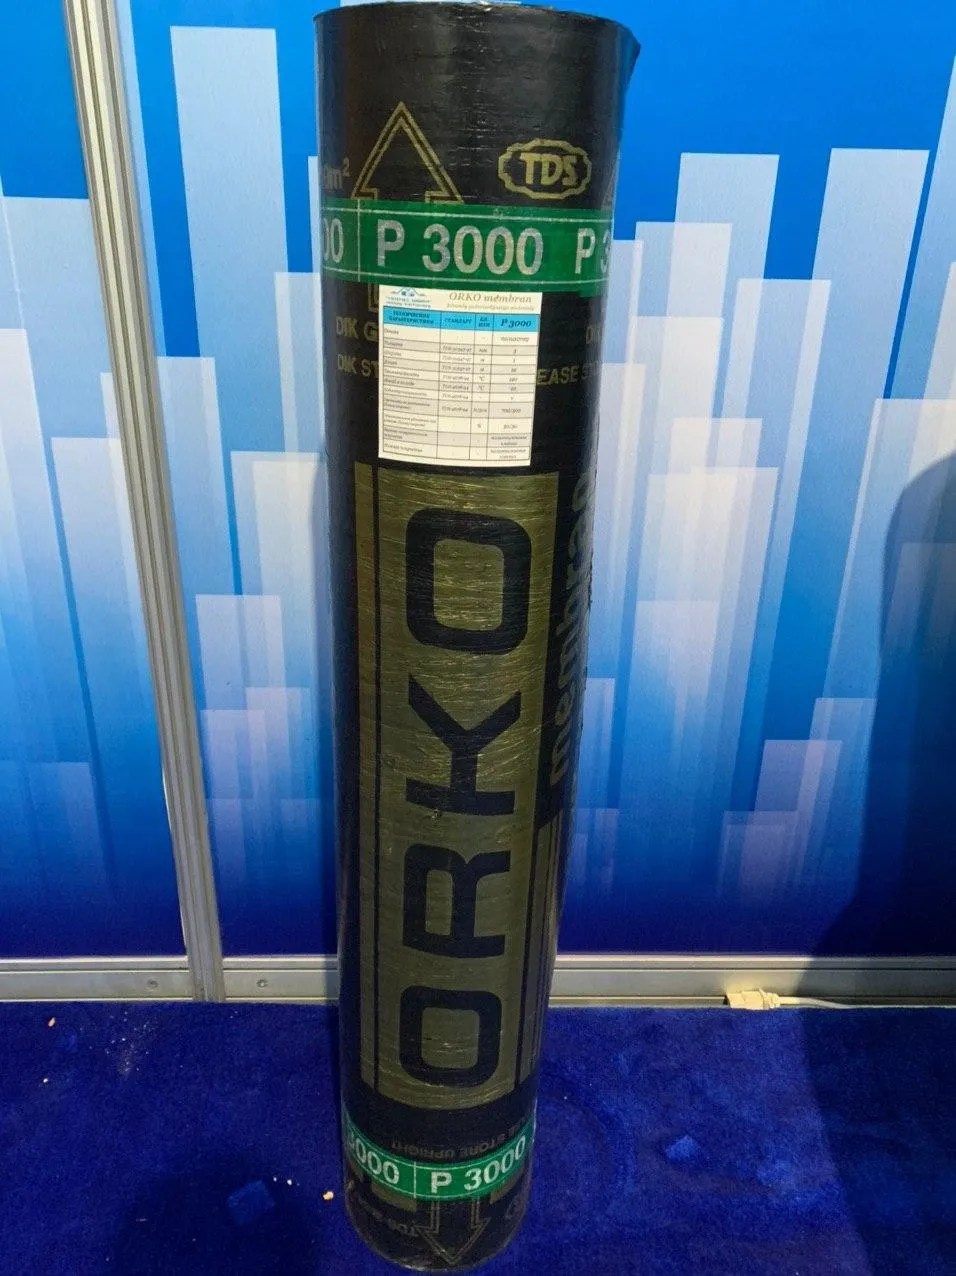 Gidro izolyatsiyalovchi material ORKO-Membrane (-10°C) P 4000#1